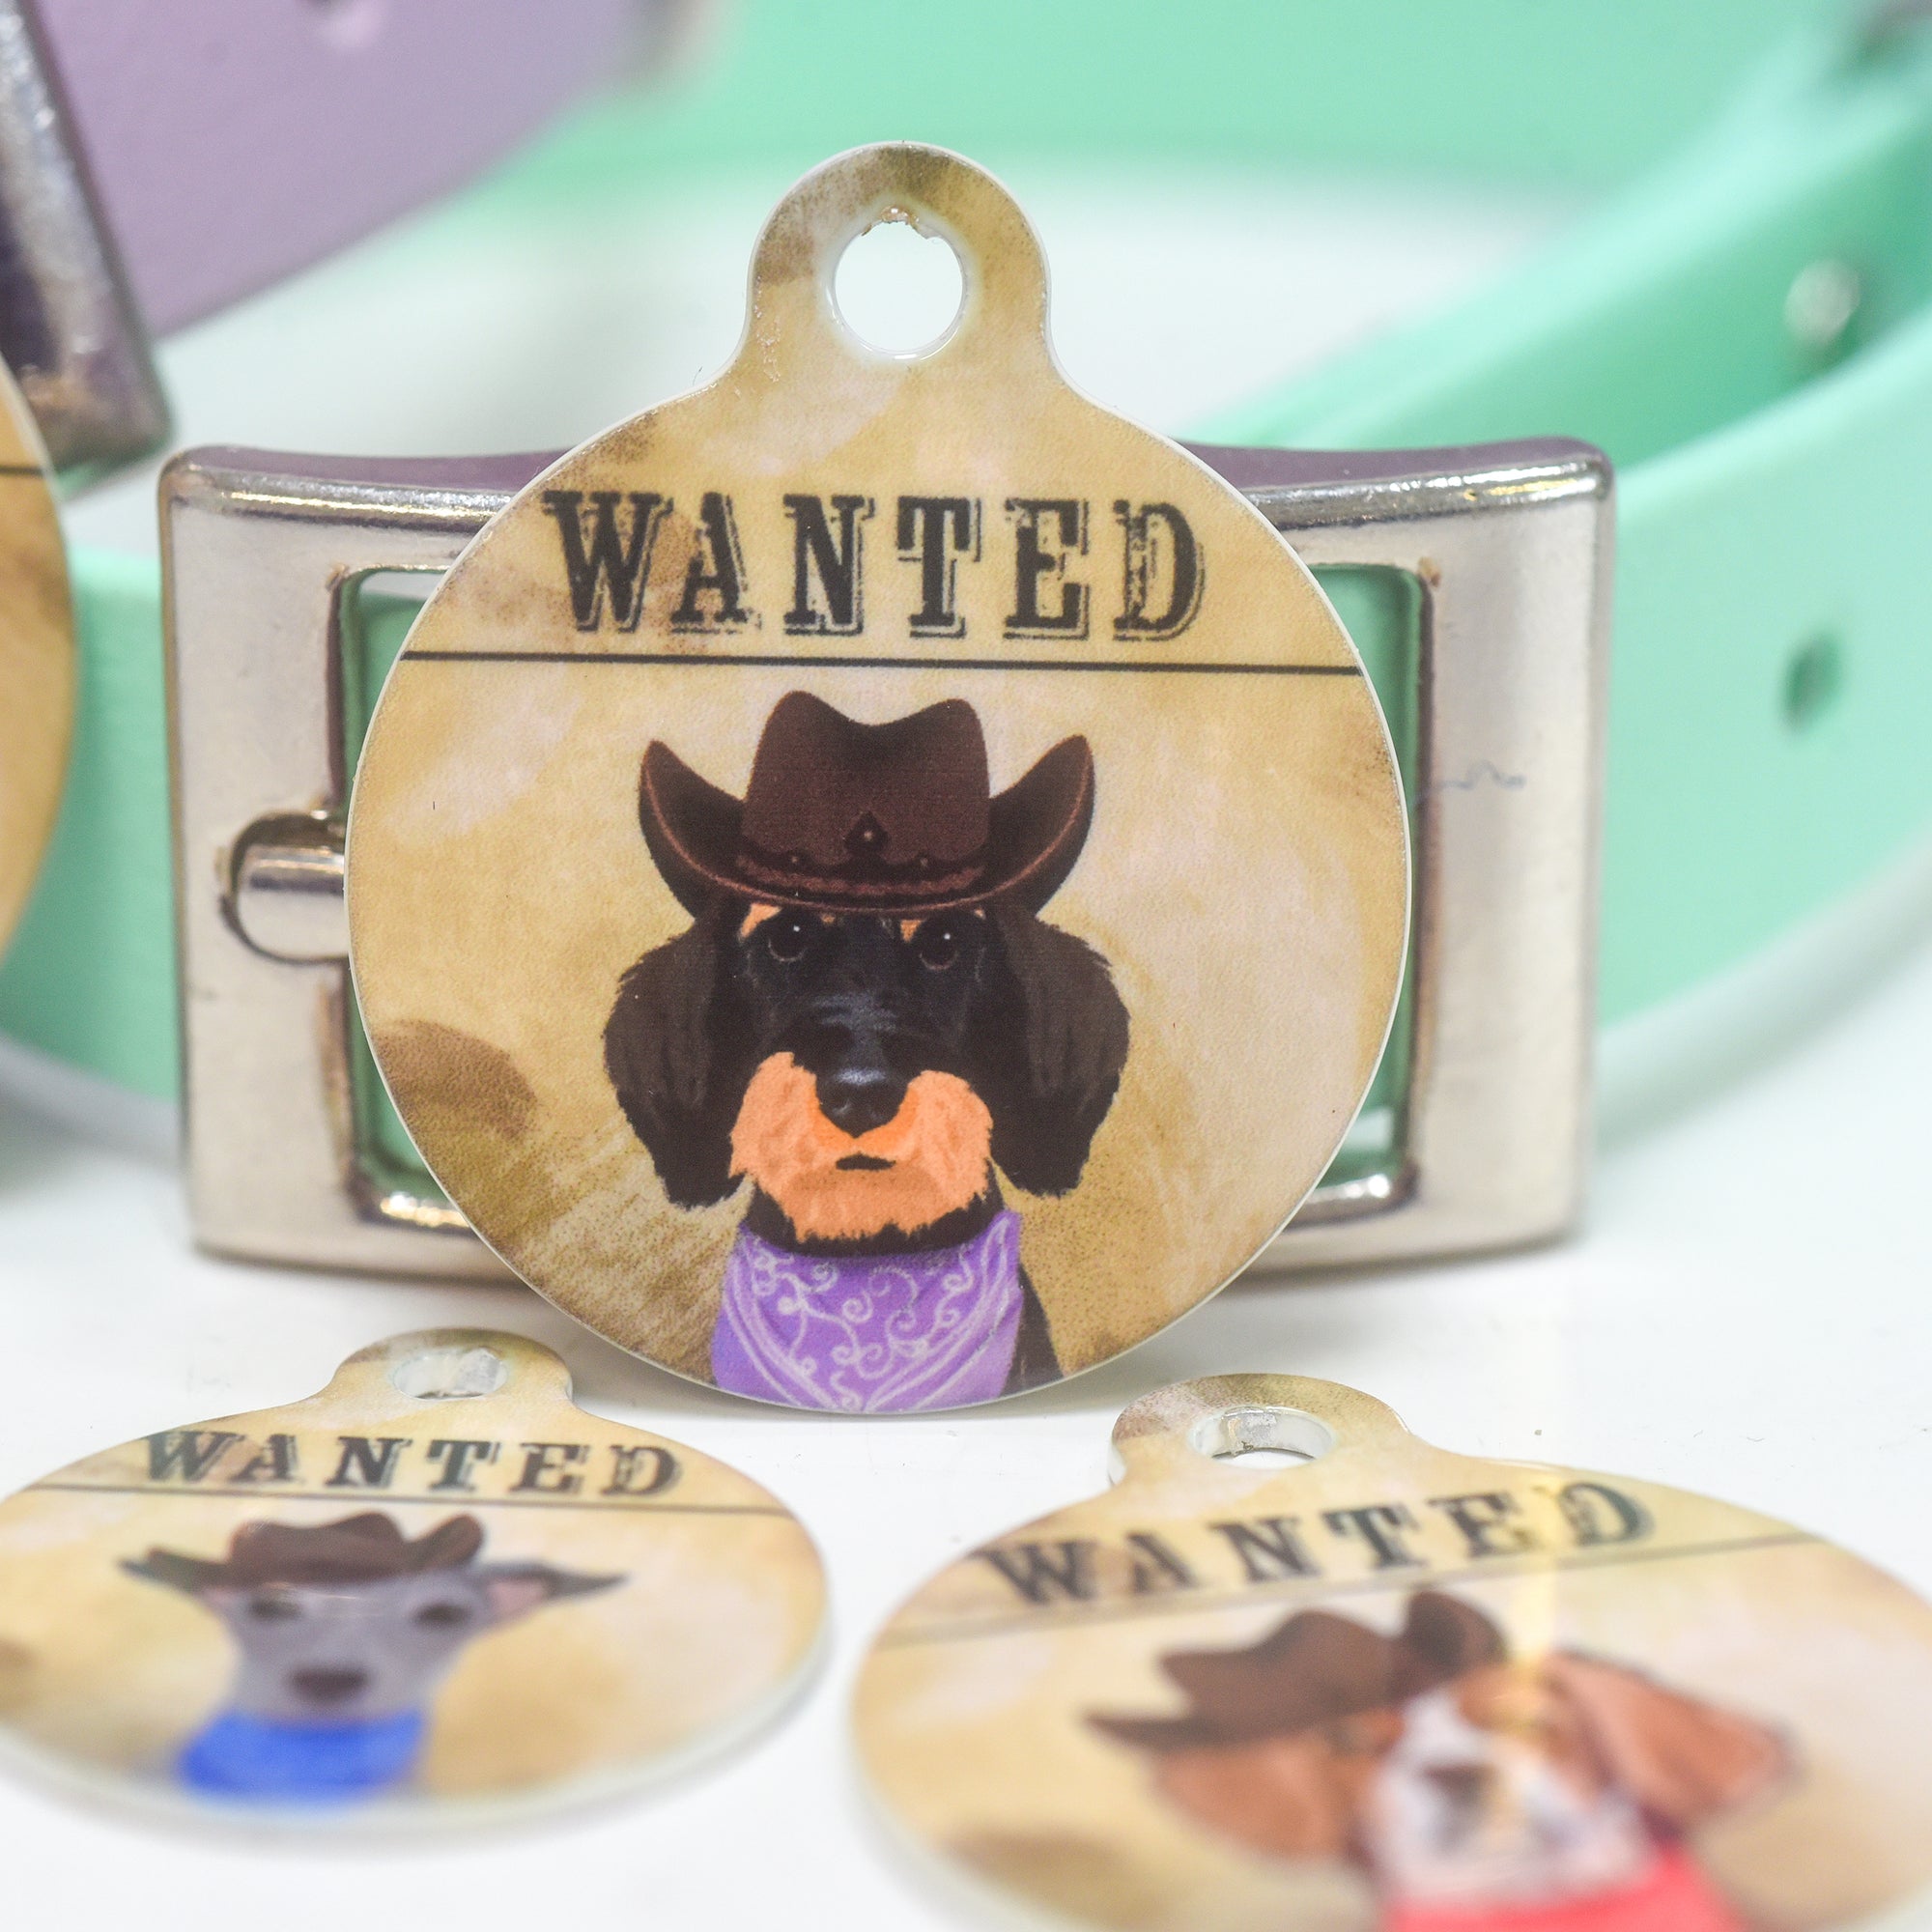 Dog Tag Personalised - Wanted Dog Wild West Theme